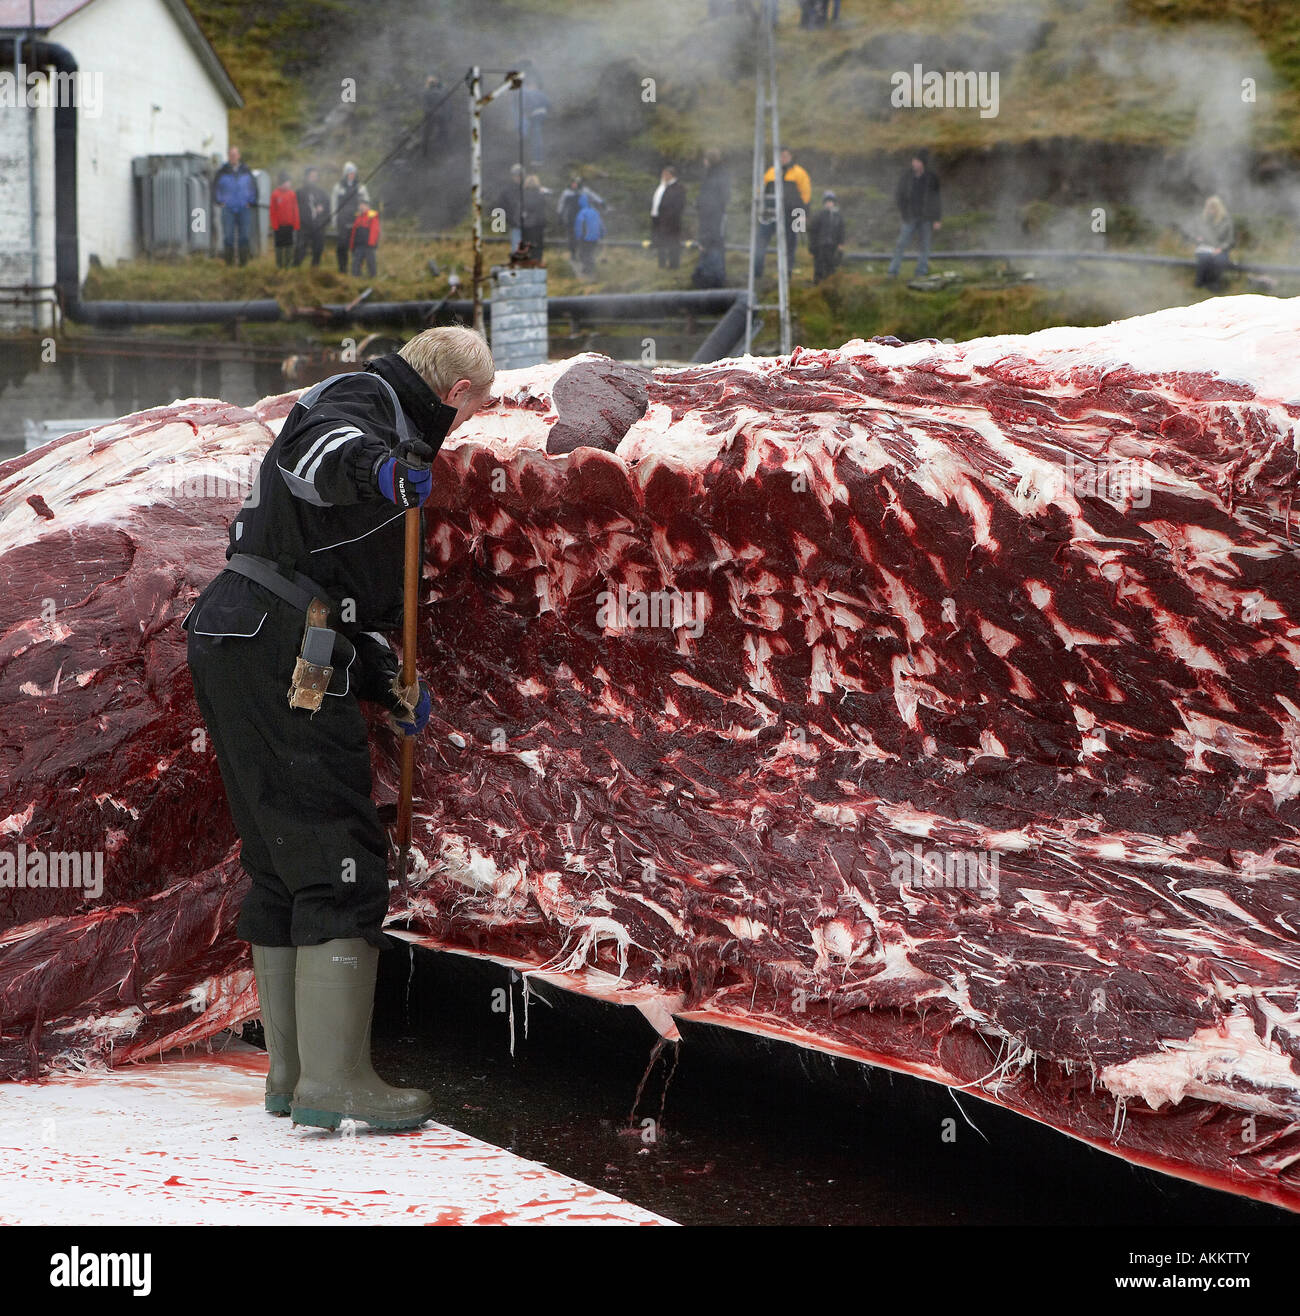 whaler-cutting-meat-of-hunted-fin-whale-AKKTTY.jpg